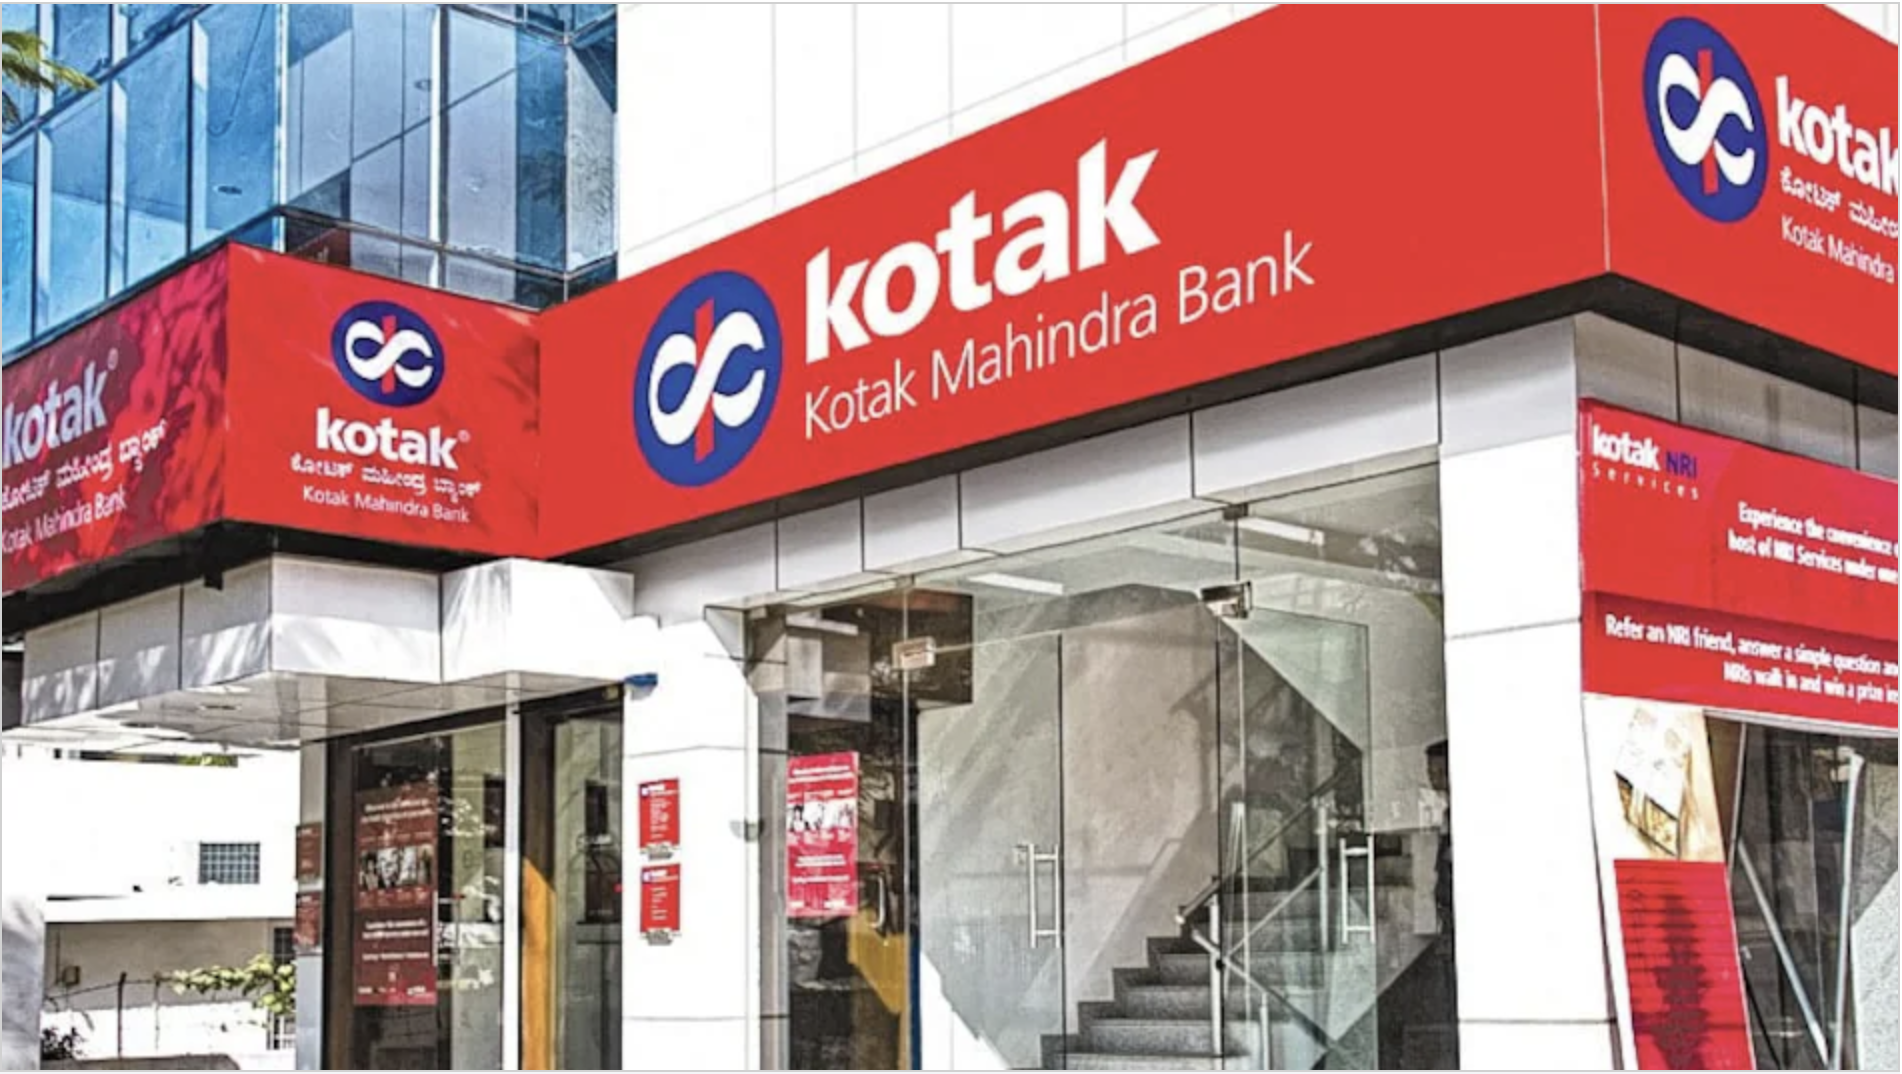 Kotak Mahindra Bank's Soaring Stock Takes a Nosedive Amidst Regulatory Restraints